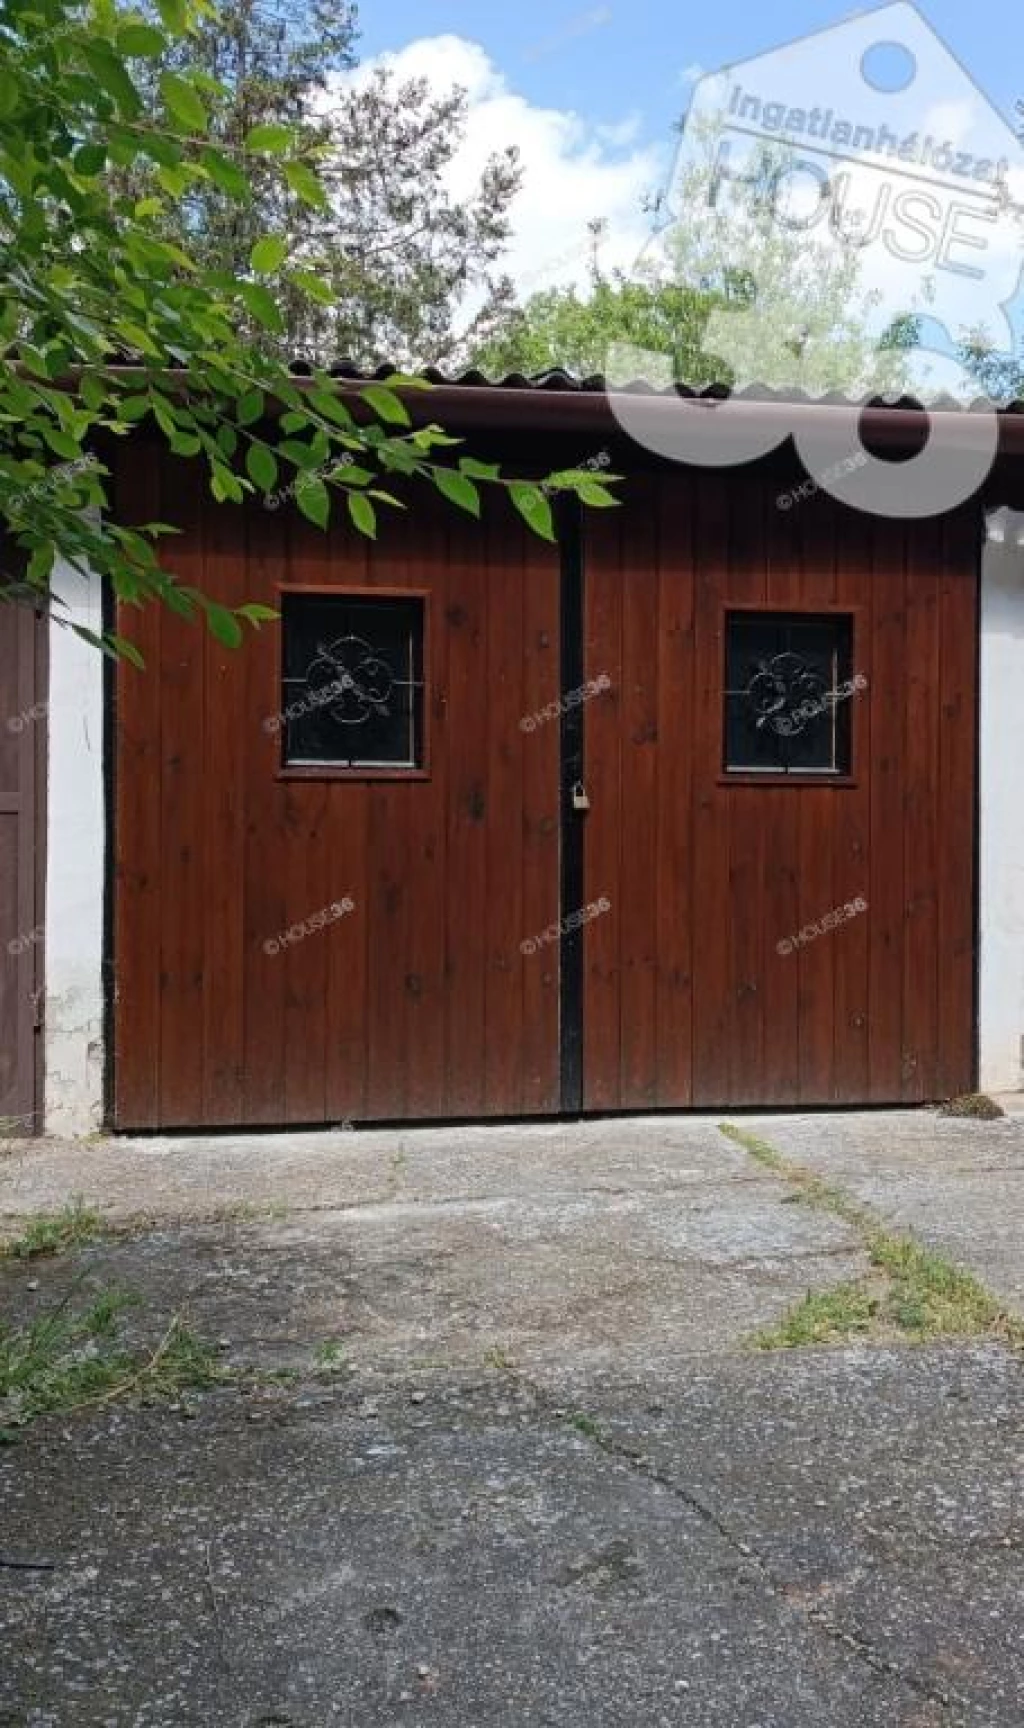 For sale other garage, Kiskunfélegyháza